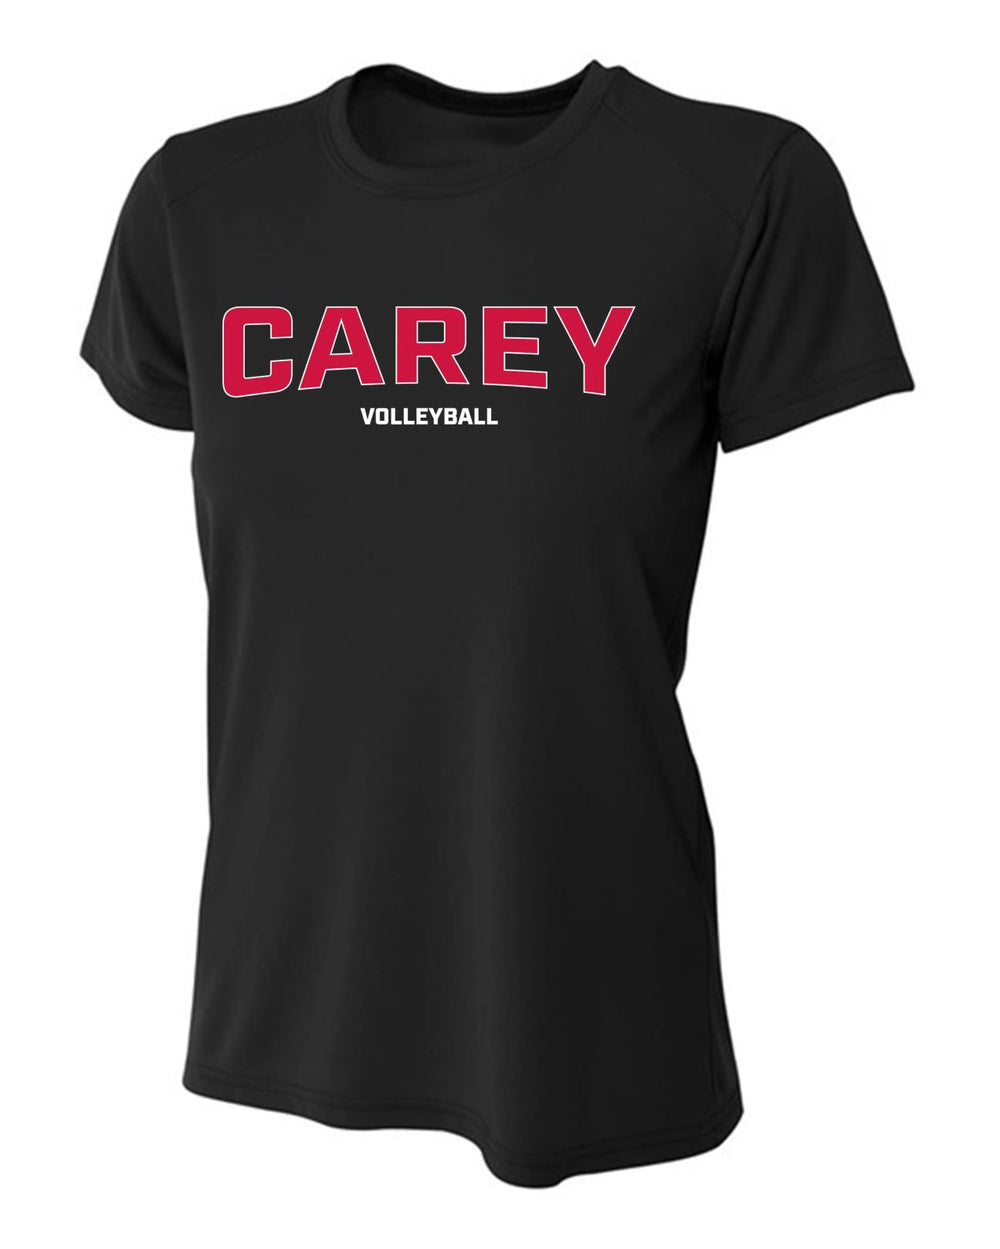 WCU Volleyball Women's Short-Sleeve Performance Shirt WCU Volleyball Black CAREY - Third Coast Soccer